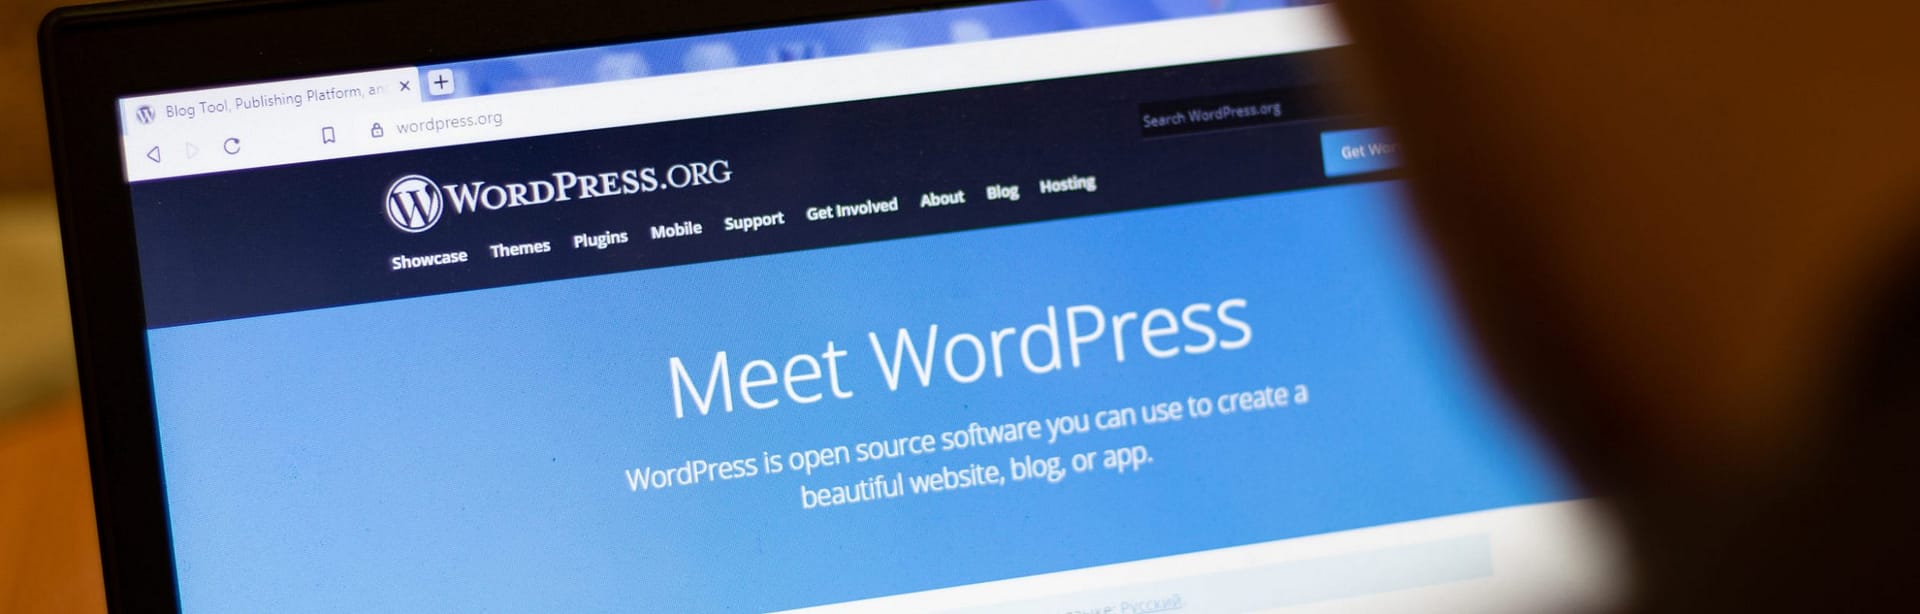 wordpress home page